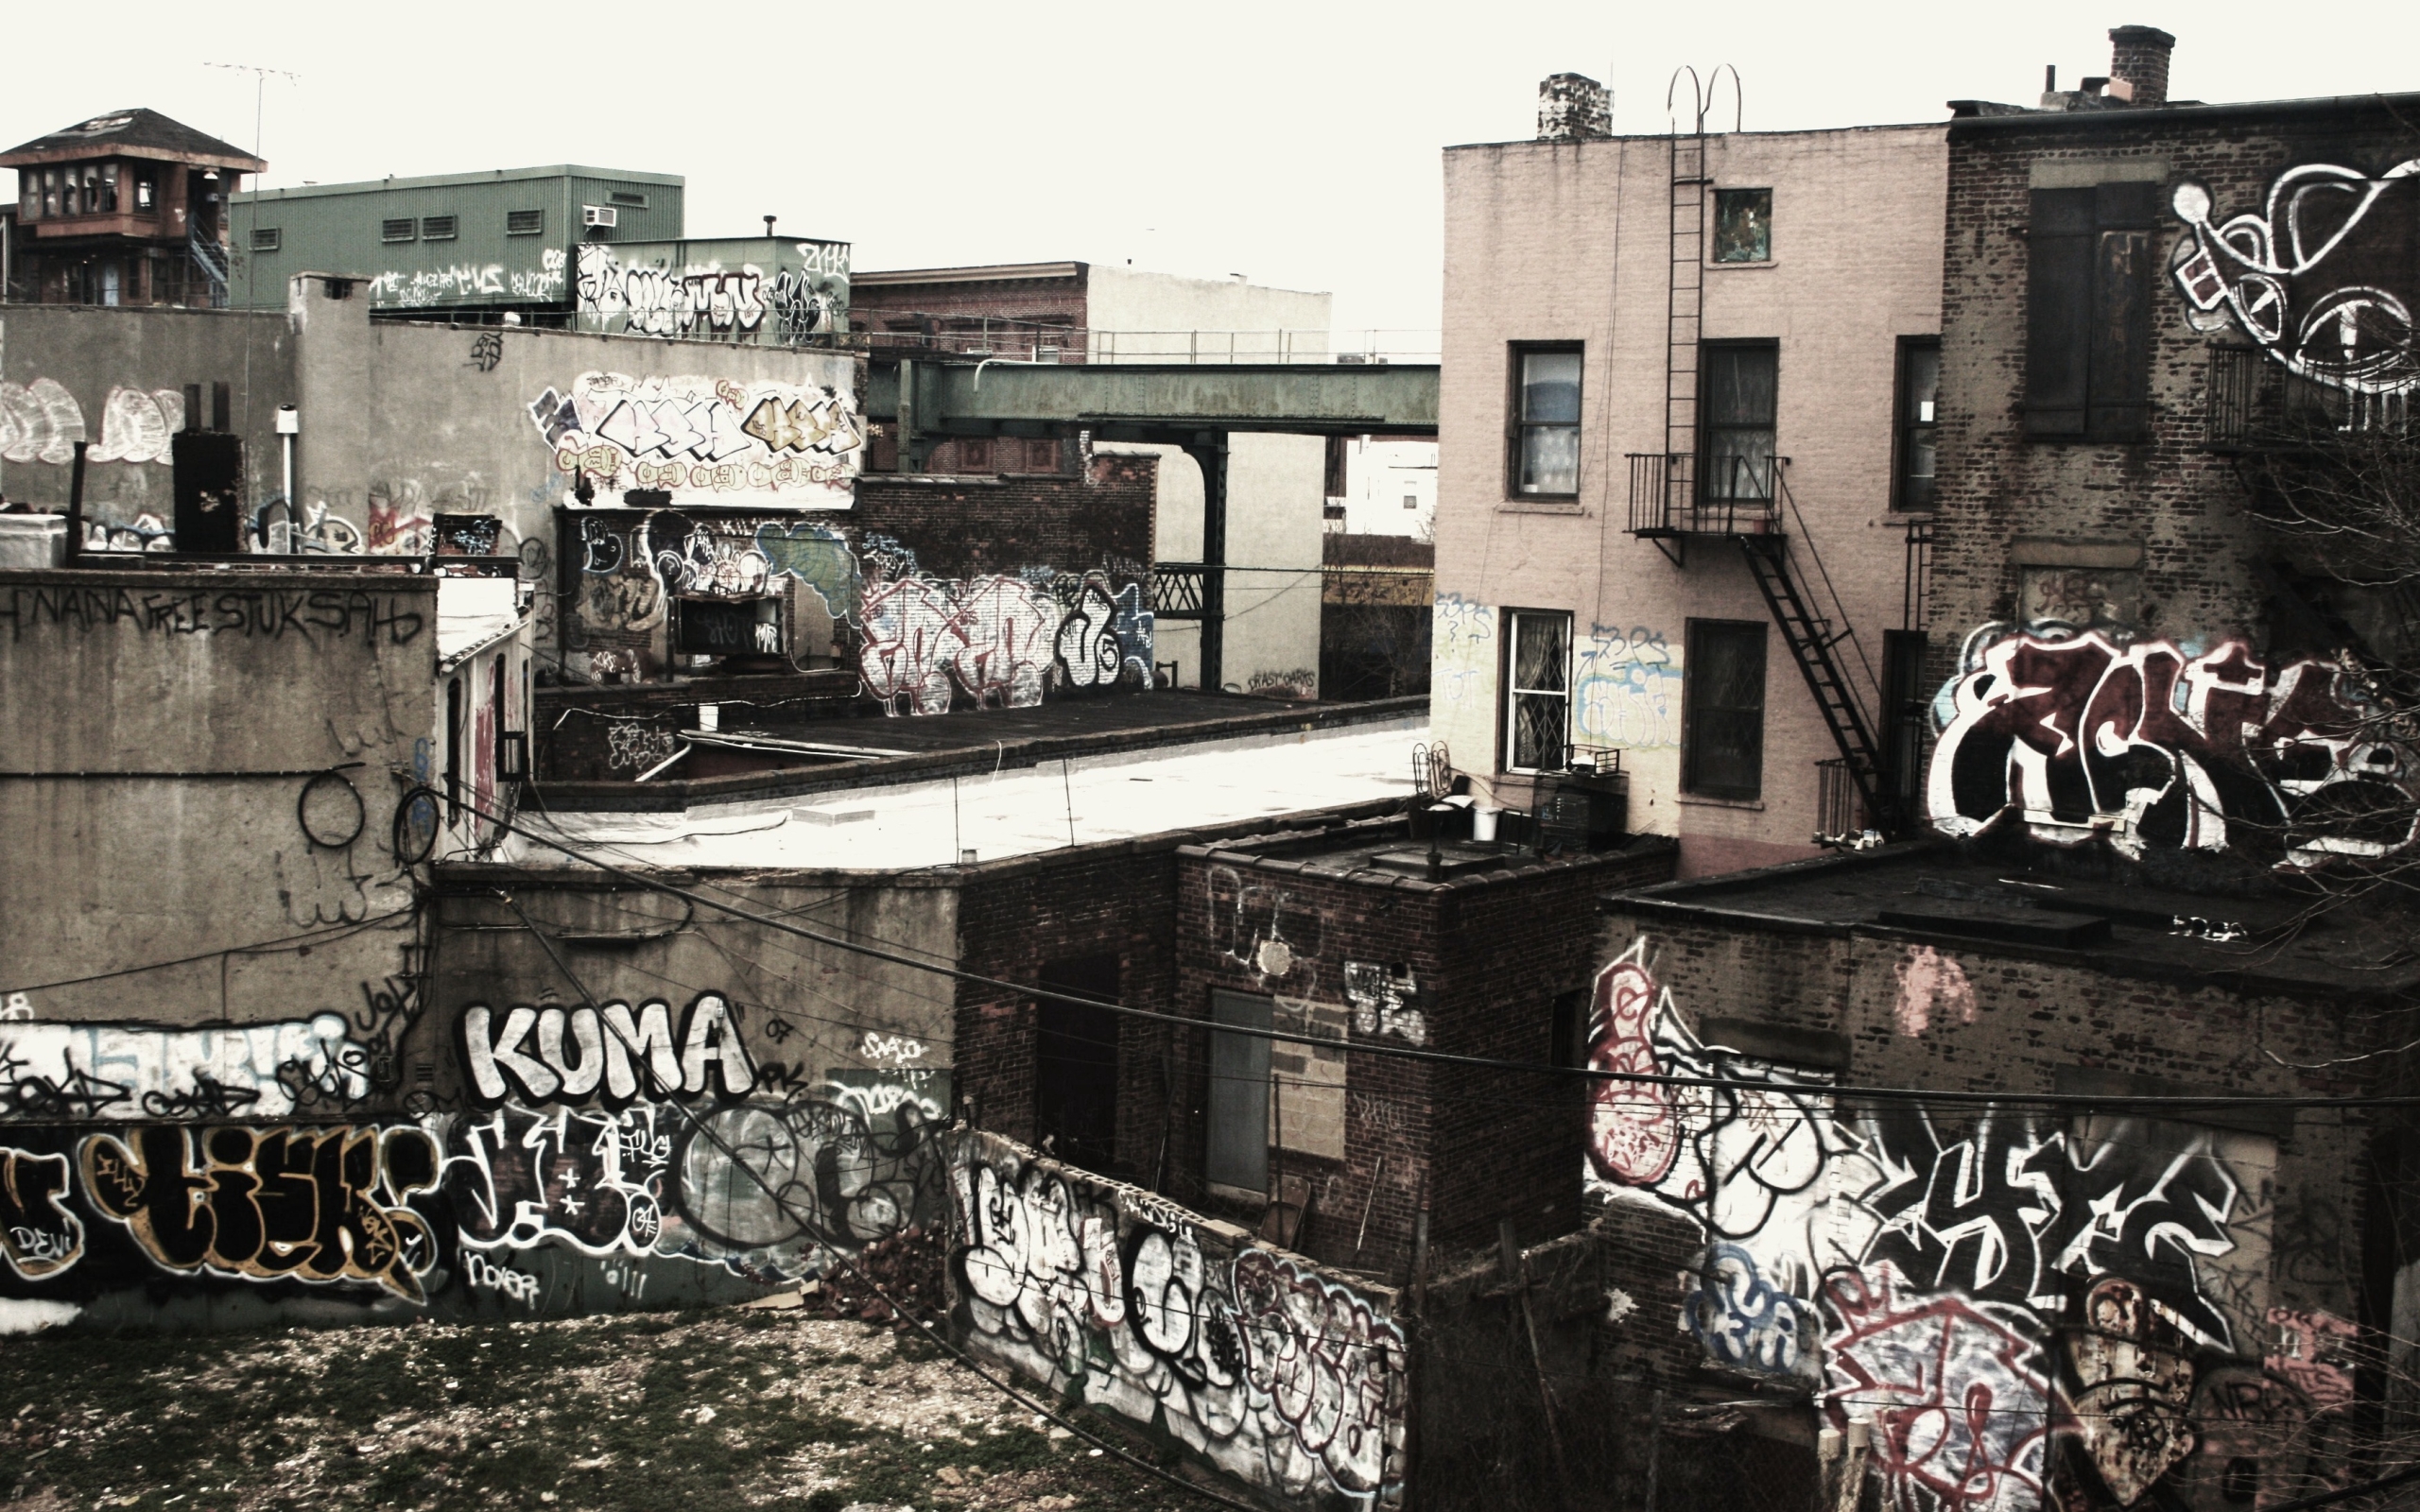 streets, graffiti, monochrome - desktop wallpaper